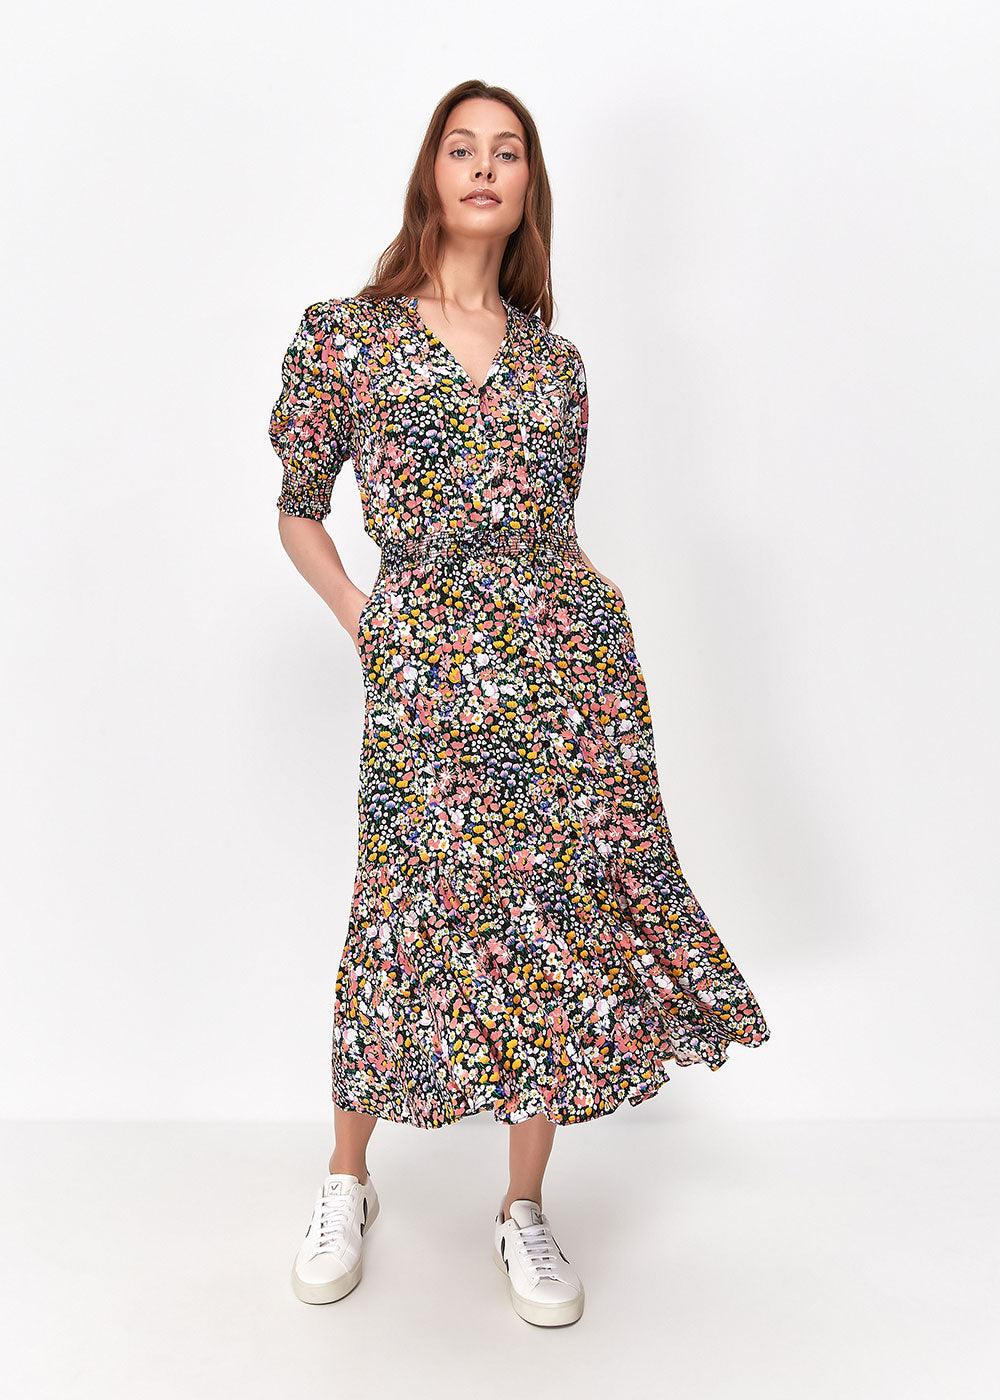 Sonder Studio Meadow Print Dress - Justina Clothing